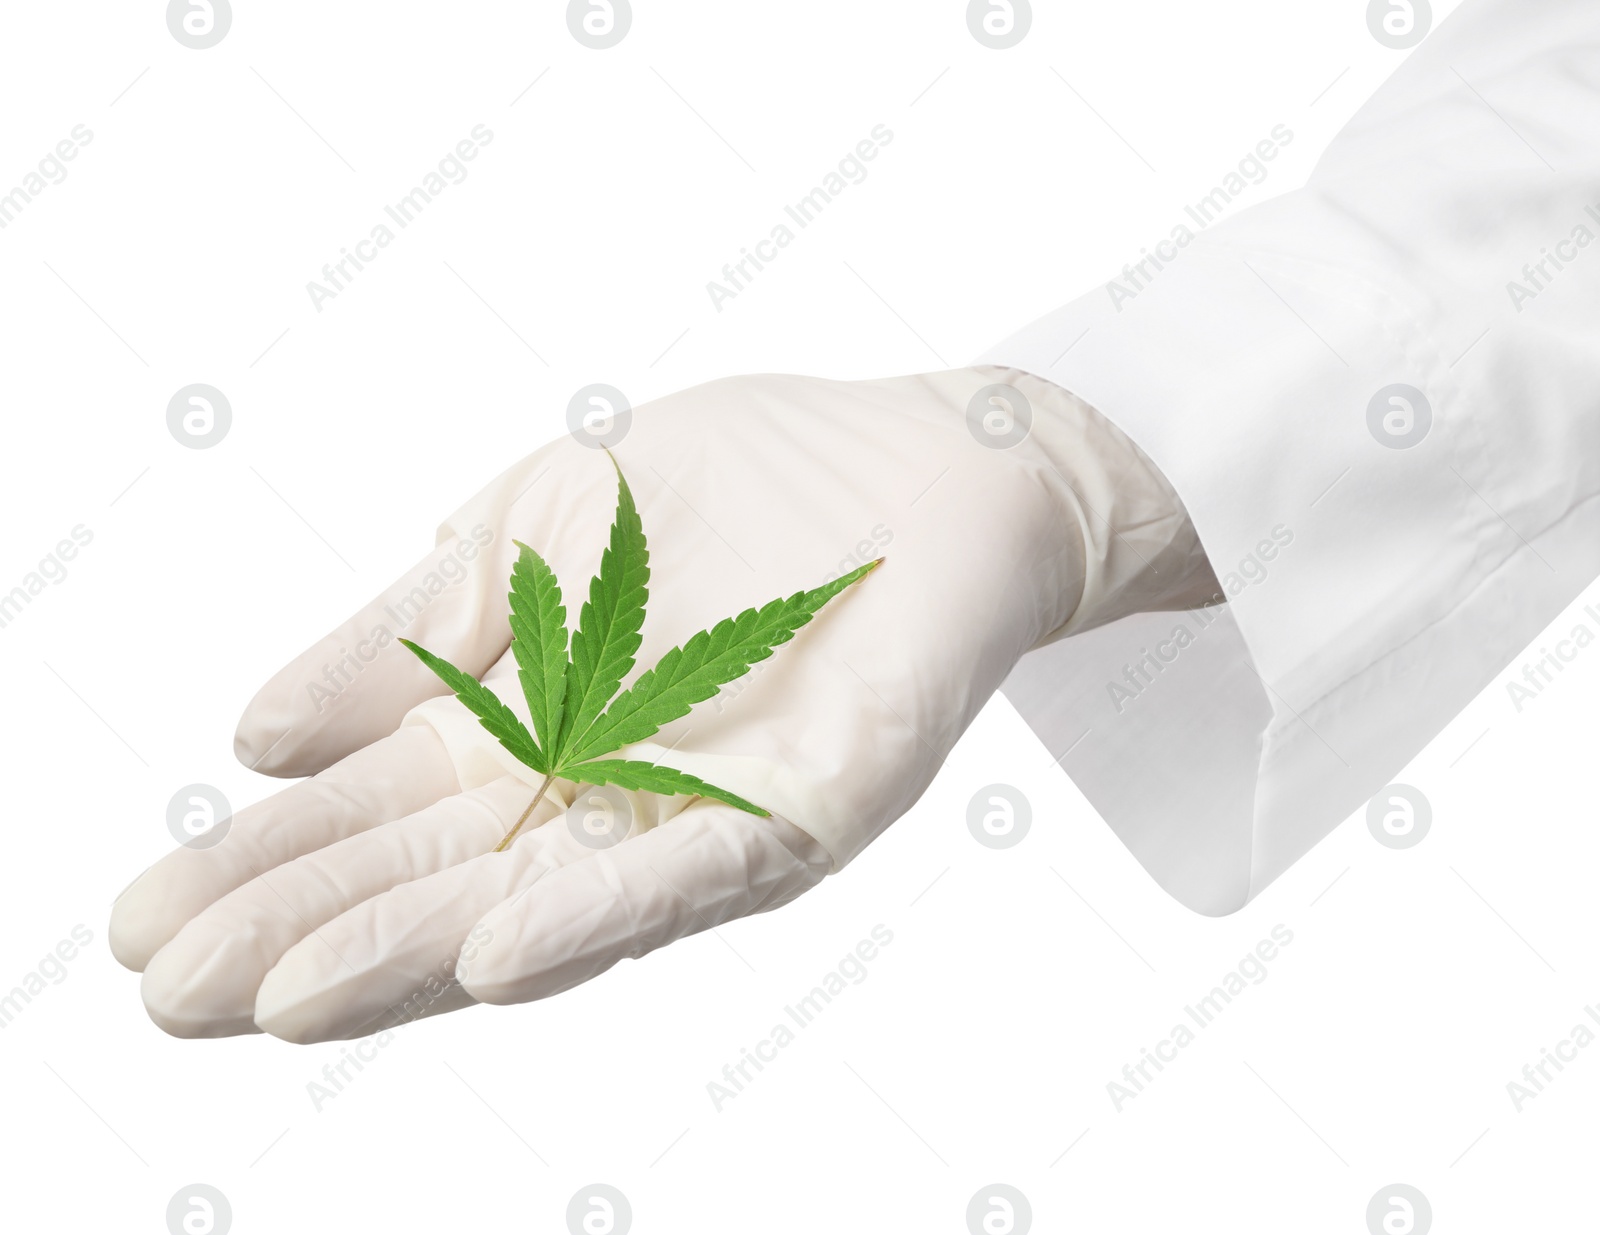 Photo of Doctor holding leaf of medical hemp on white background, closeup